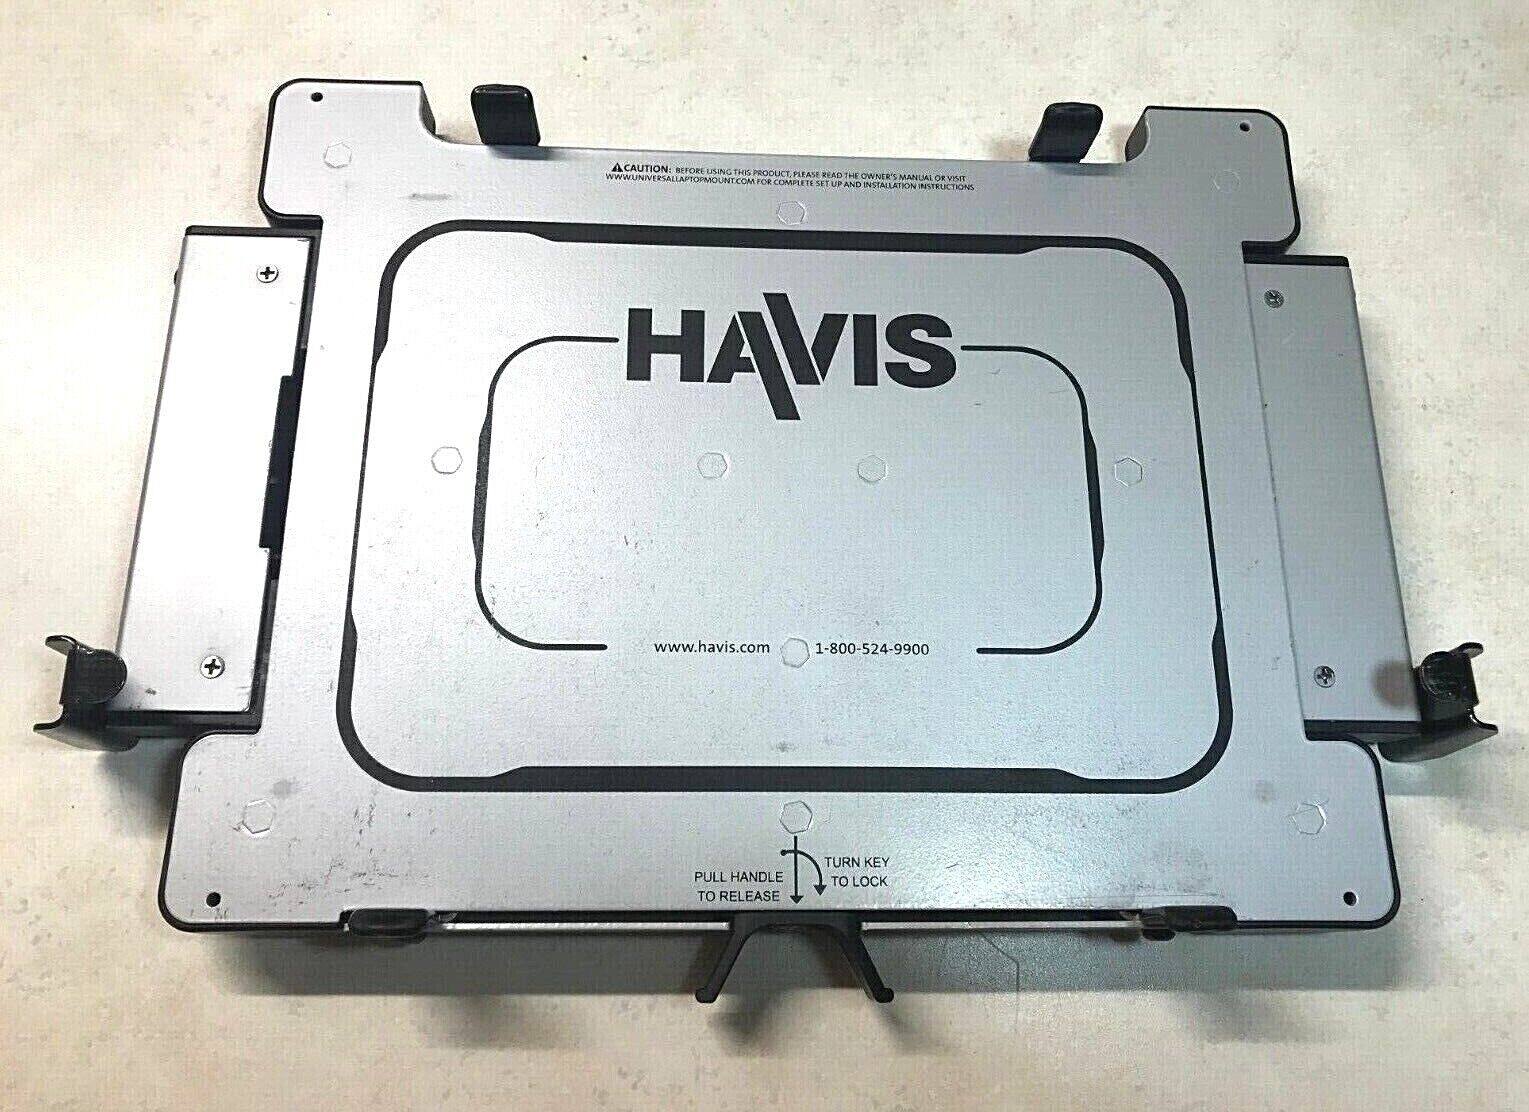 Havis UT-101 Universal Laptop Cradle Docking Station Vehicle Mount